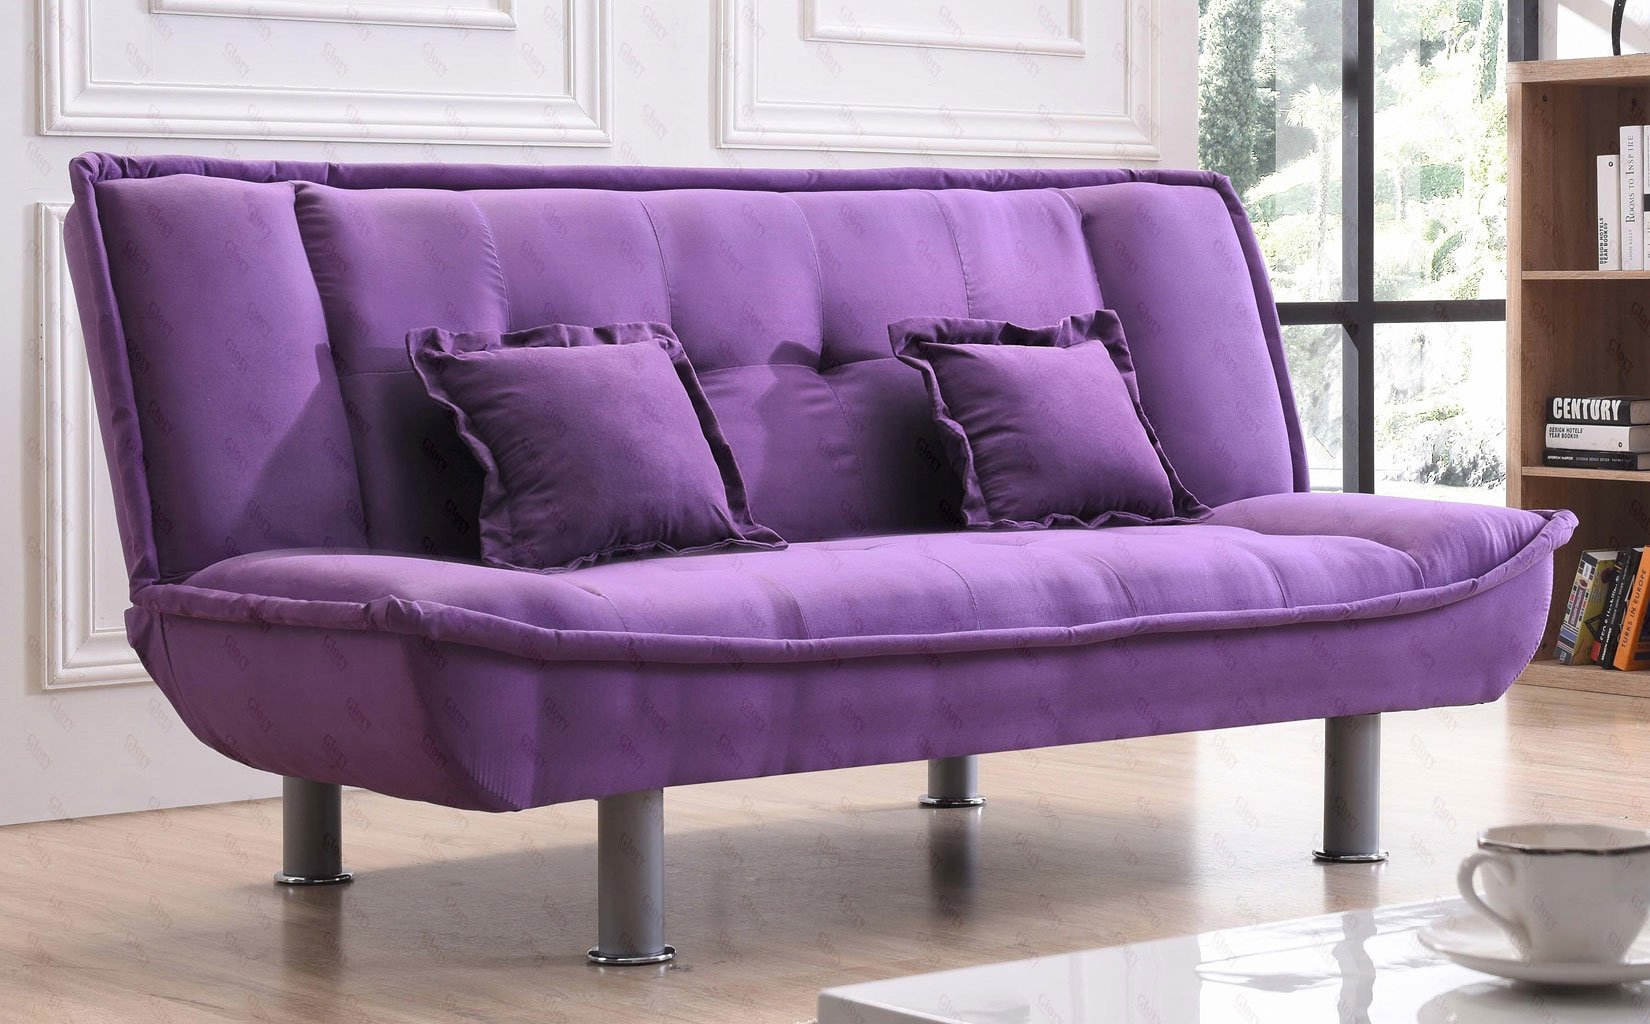 G507 Purple Sofa Bed - Futons - Living Room Furniture - Living Room